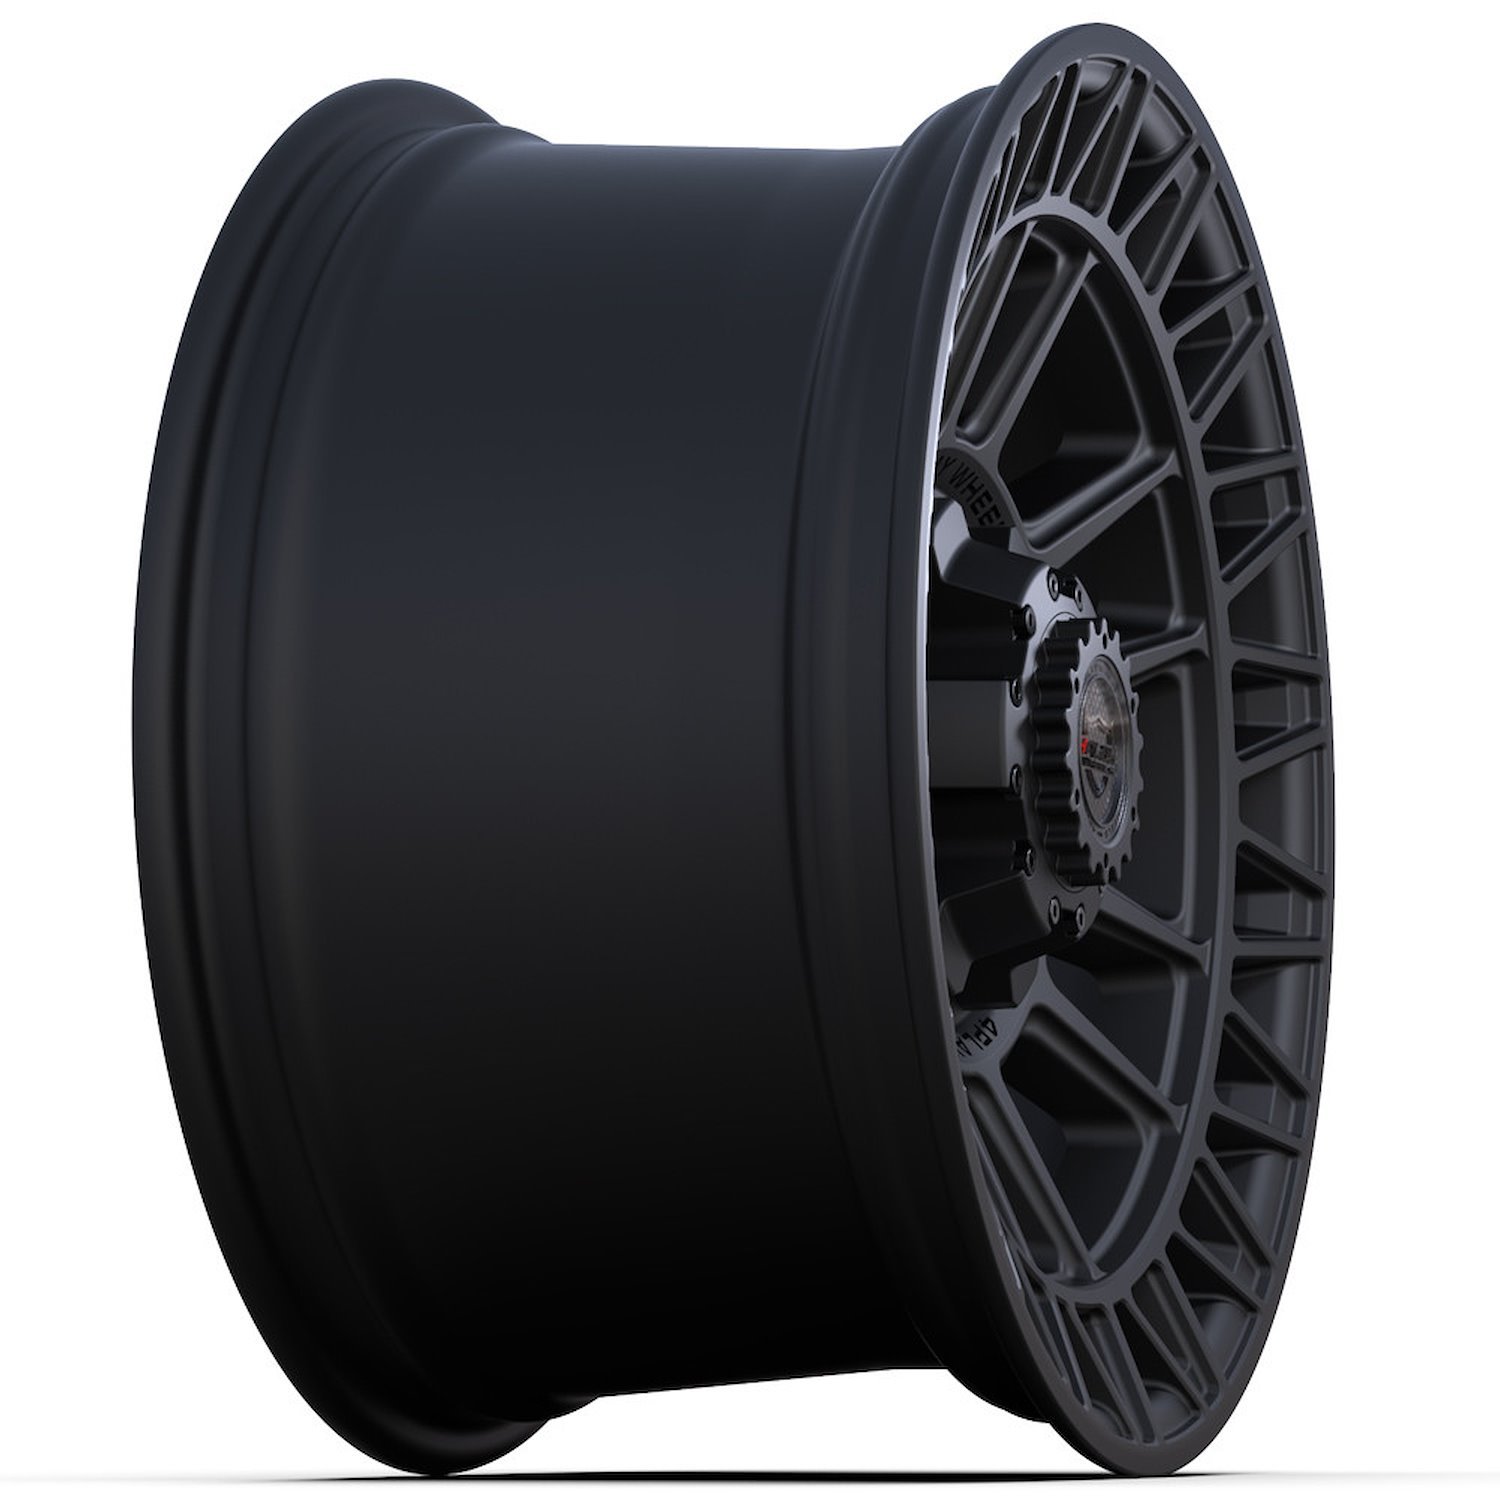 4Play S12 Satin Black Wheel Size: 17" x 9"